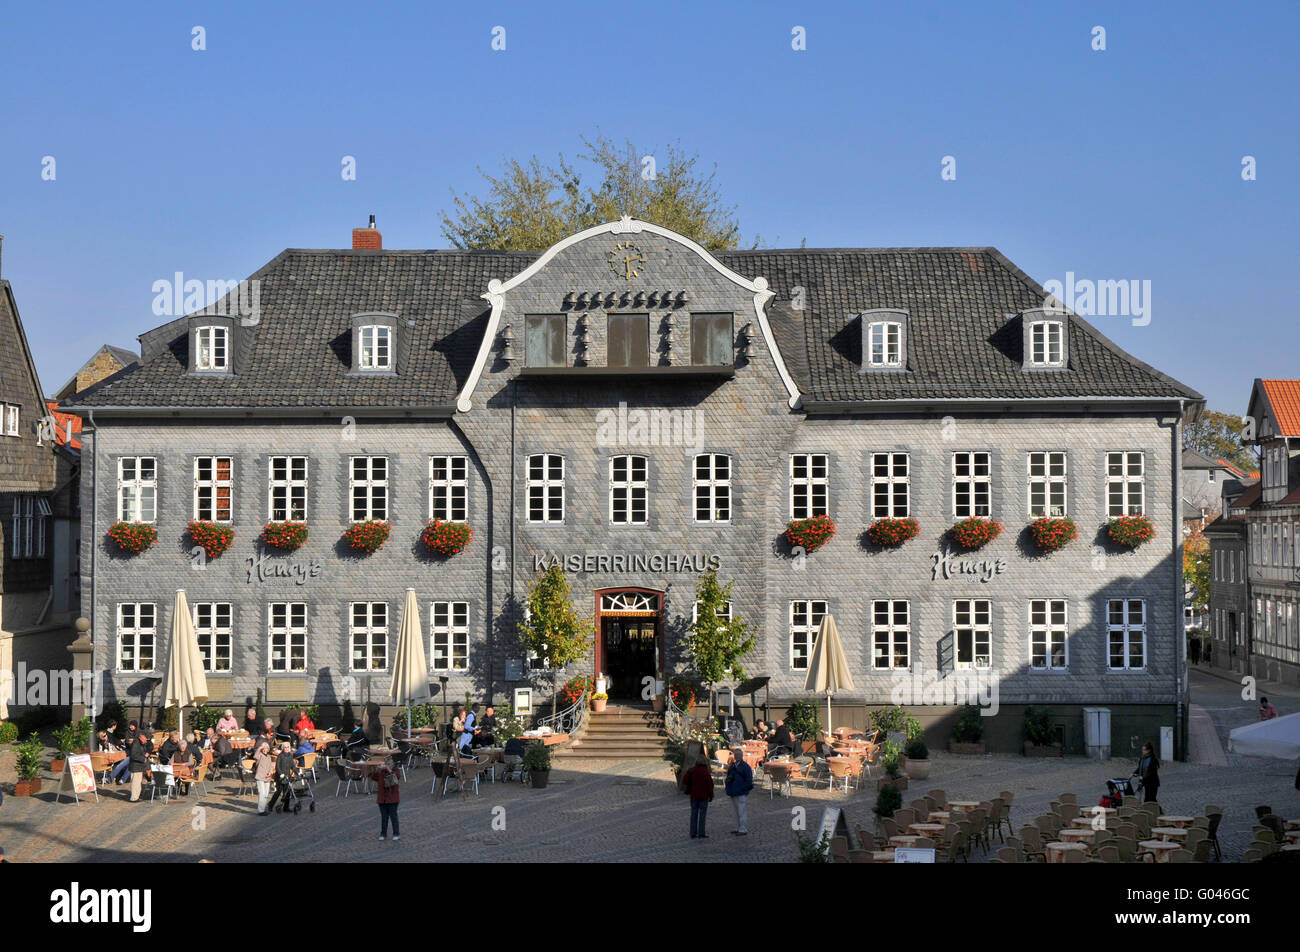 Kaiserringhaus goslar hi-res stock photography and images - Alamy